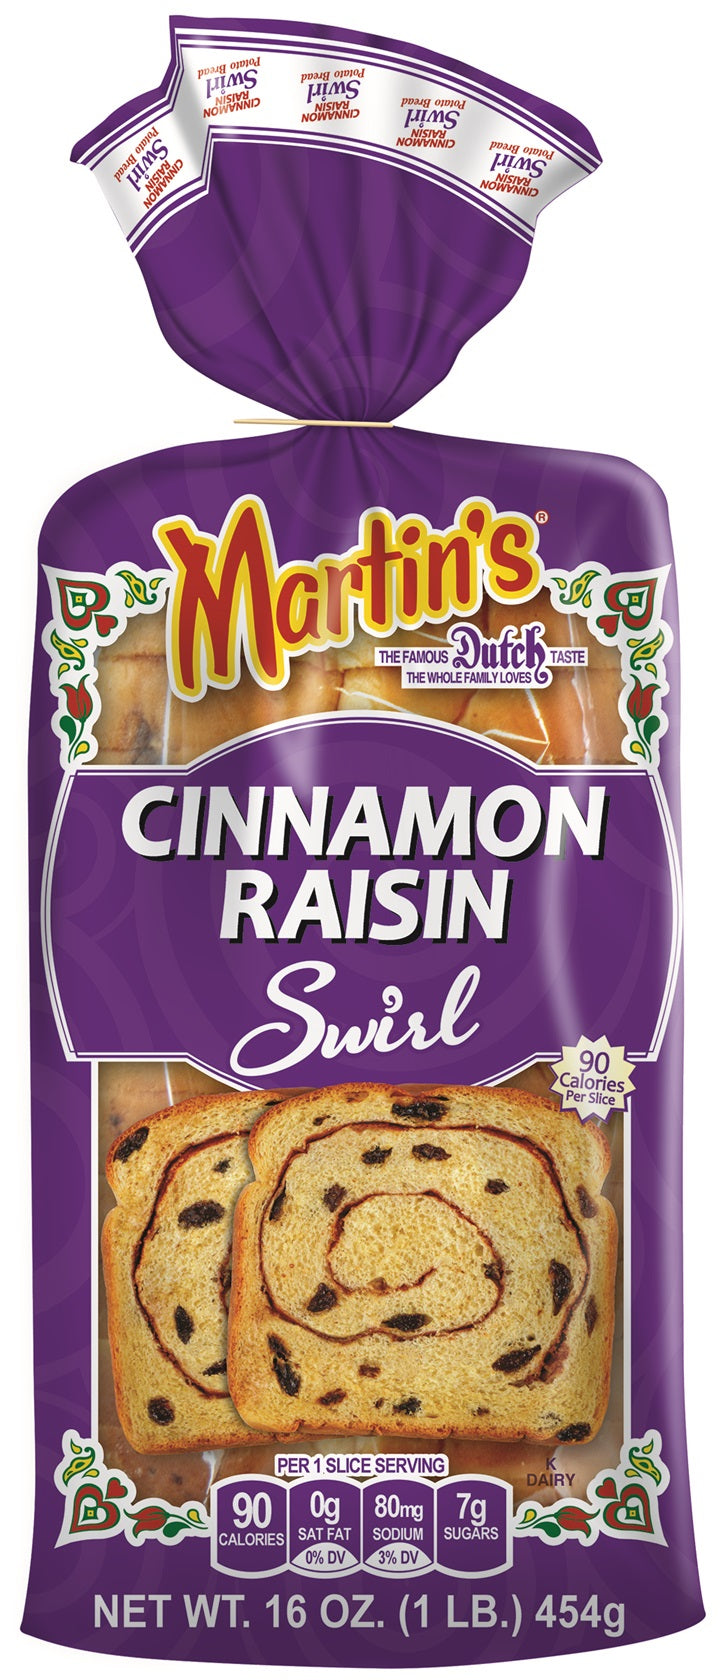 Martin's Famous Pastry Cinnamon Raisin Swirl Potato Bread, 16 oz. Three Loaves